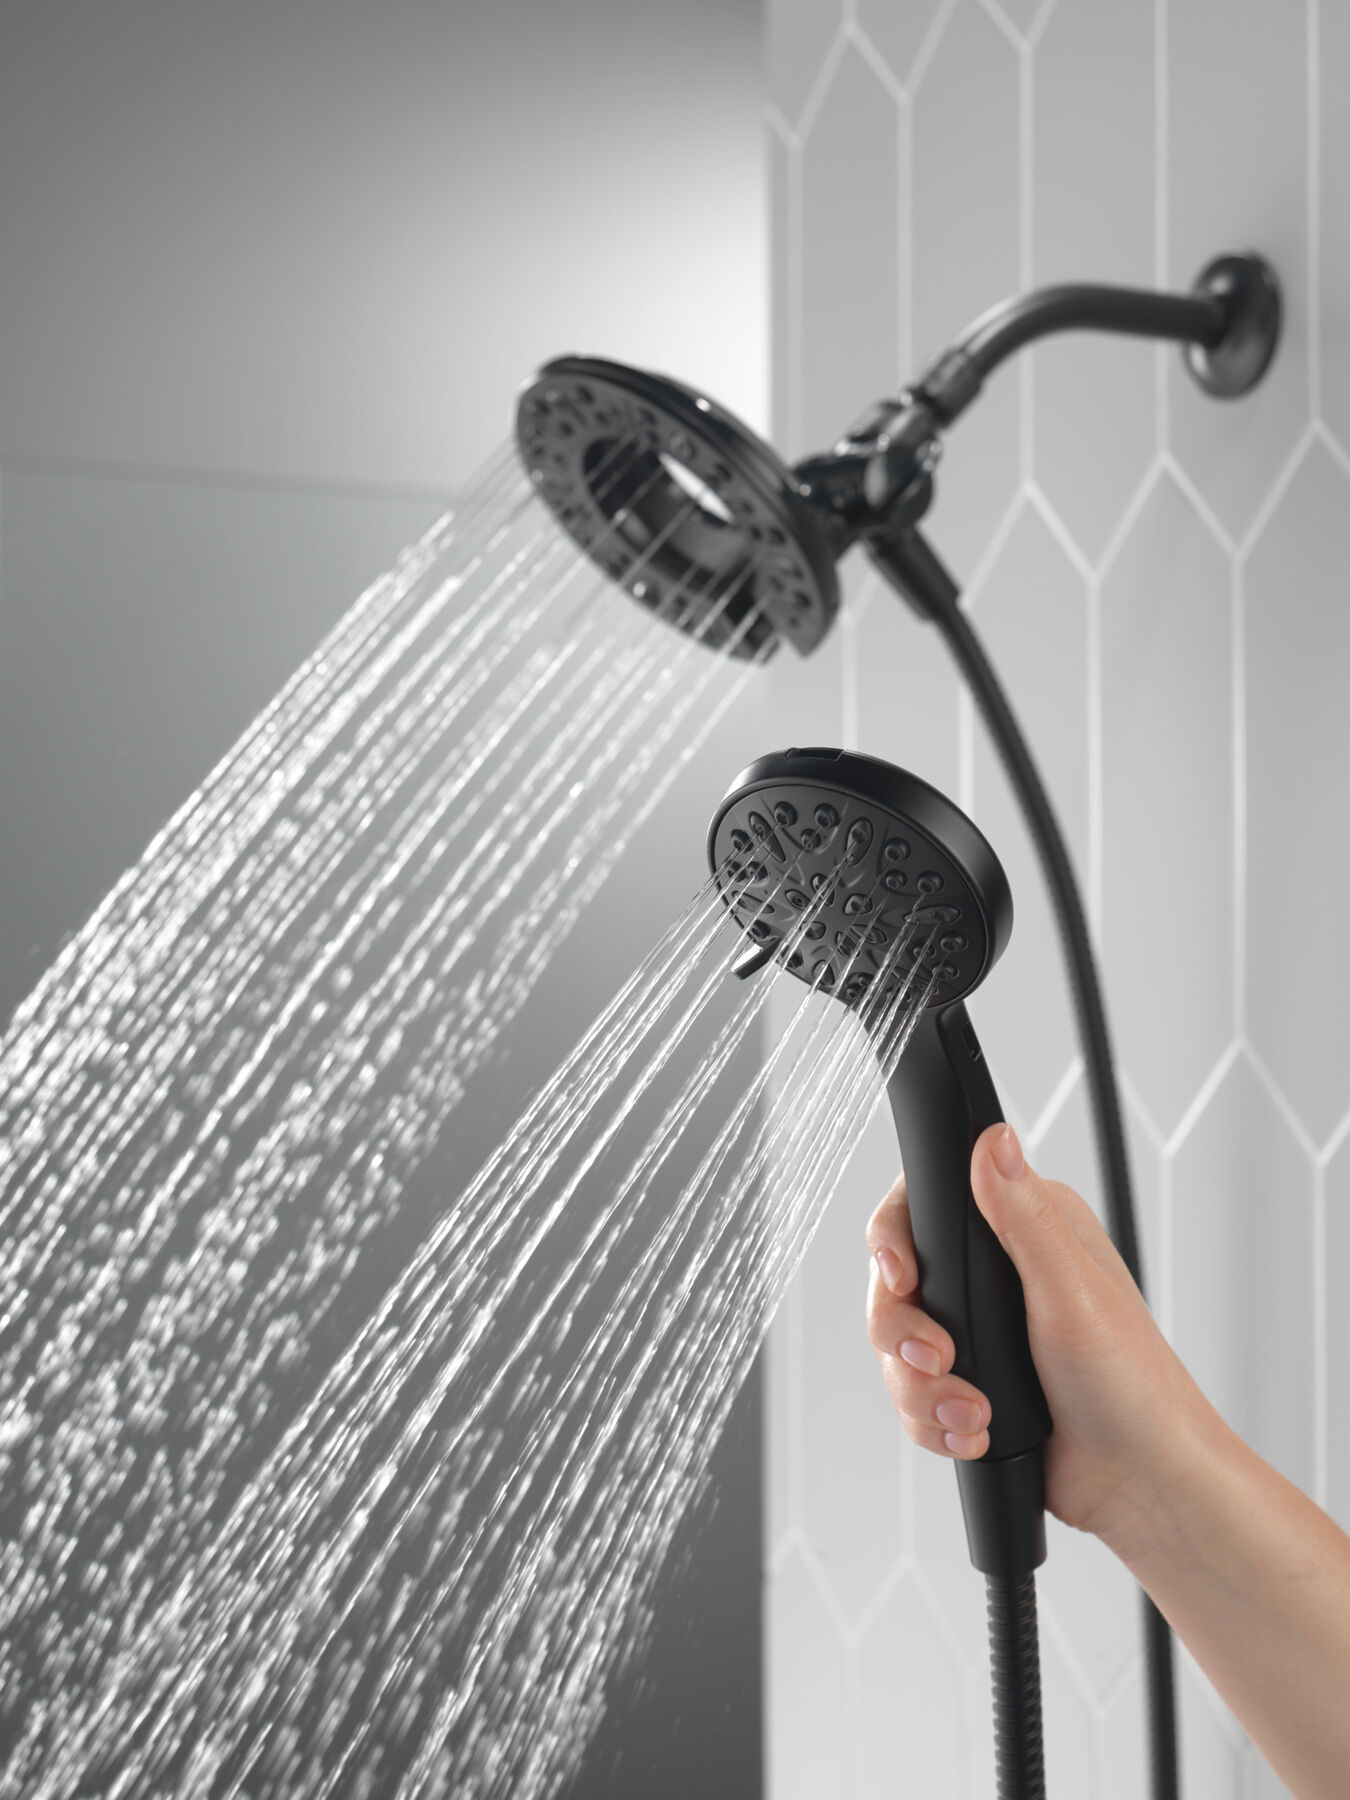 Detachable shower and bath grip